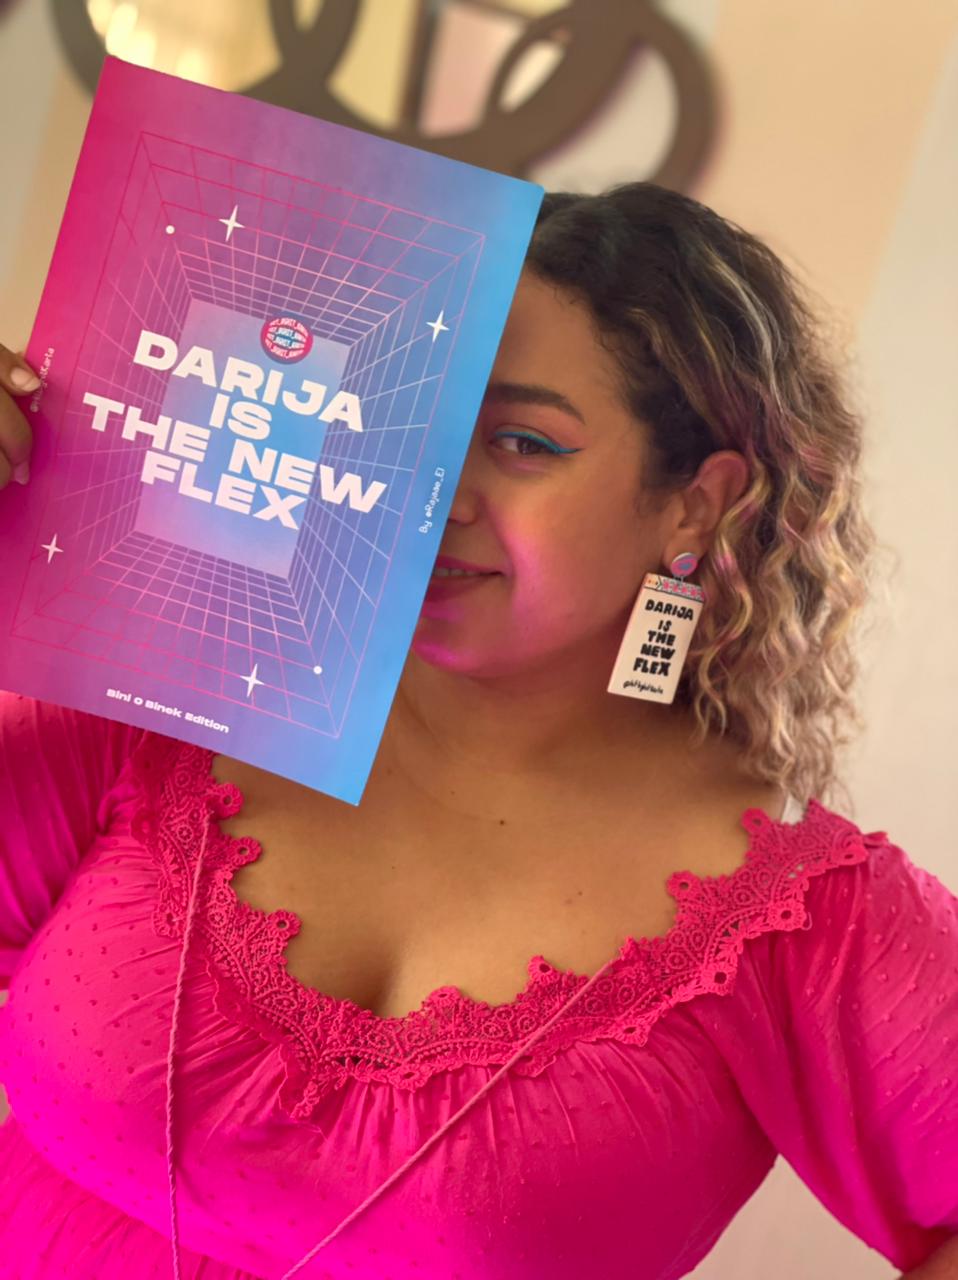 "Darija is the new flex", interview avec Rajae El Battah